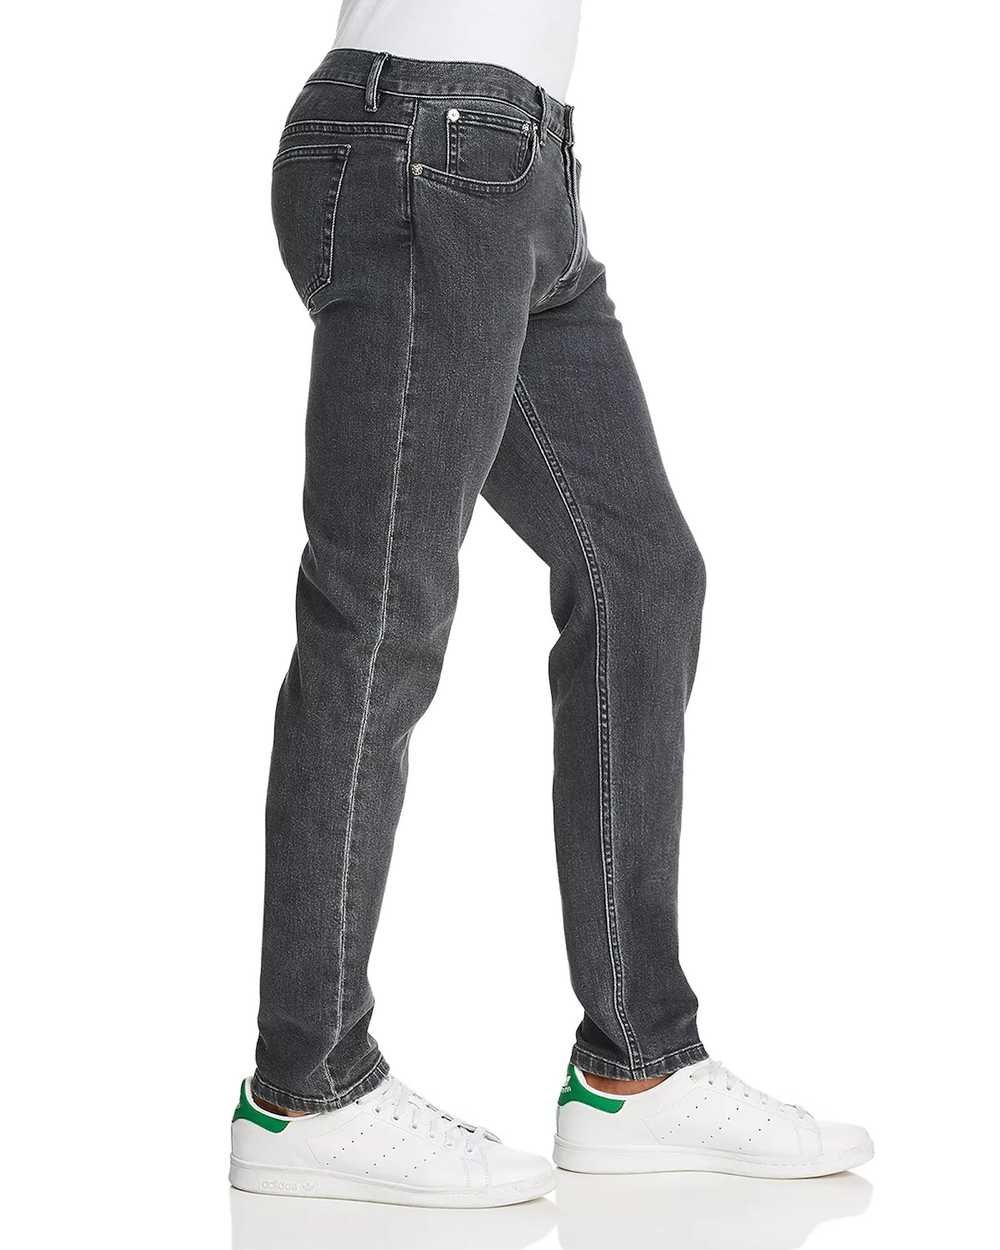 A.P.C. Petite New Standard Jeans - image 8